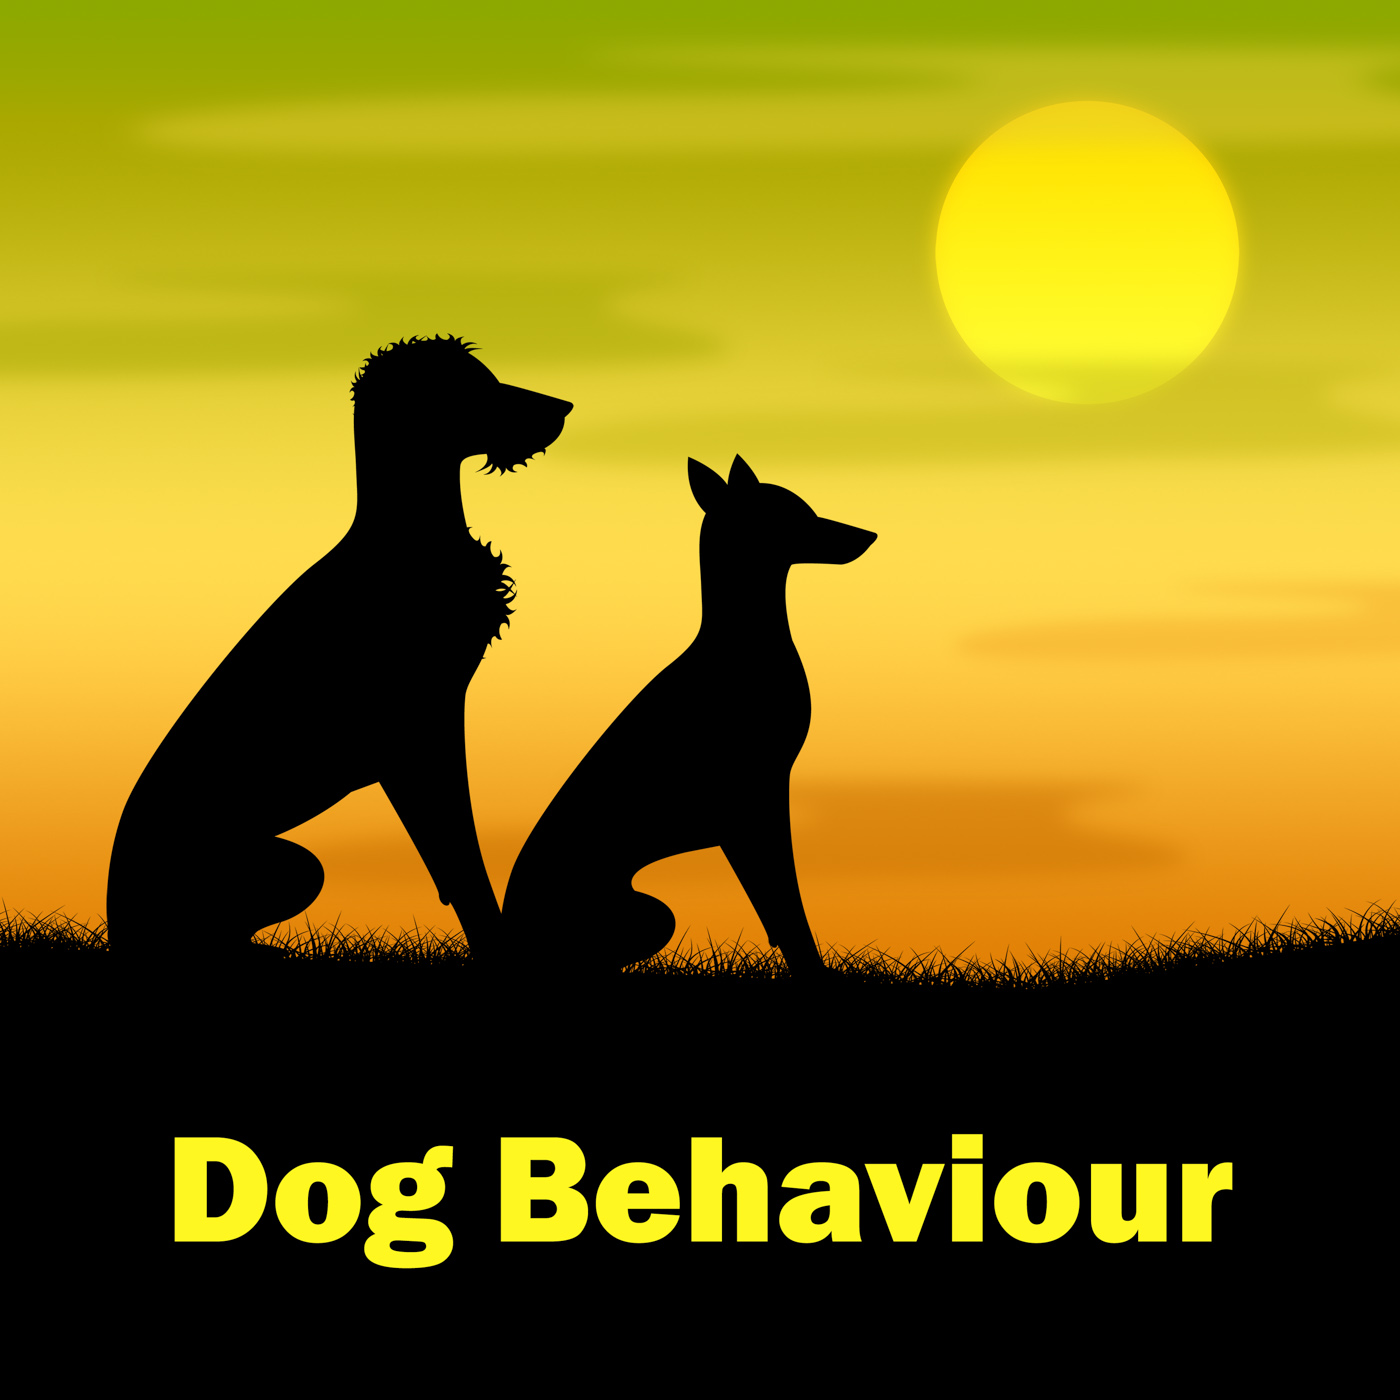 Dog behaviour means actions landscape and pup photo